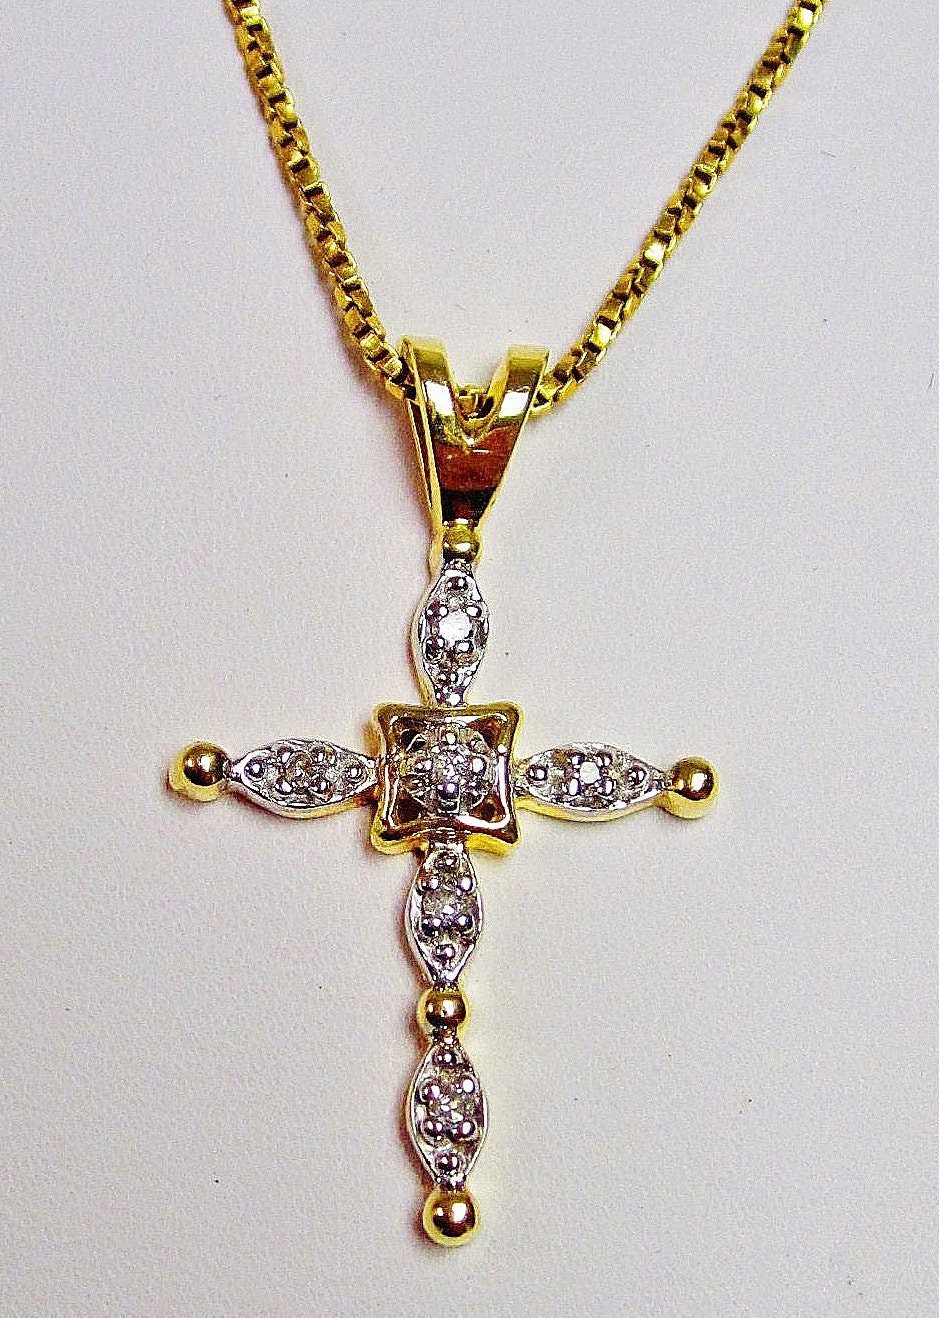 A Catholic Cross